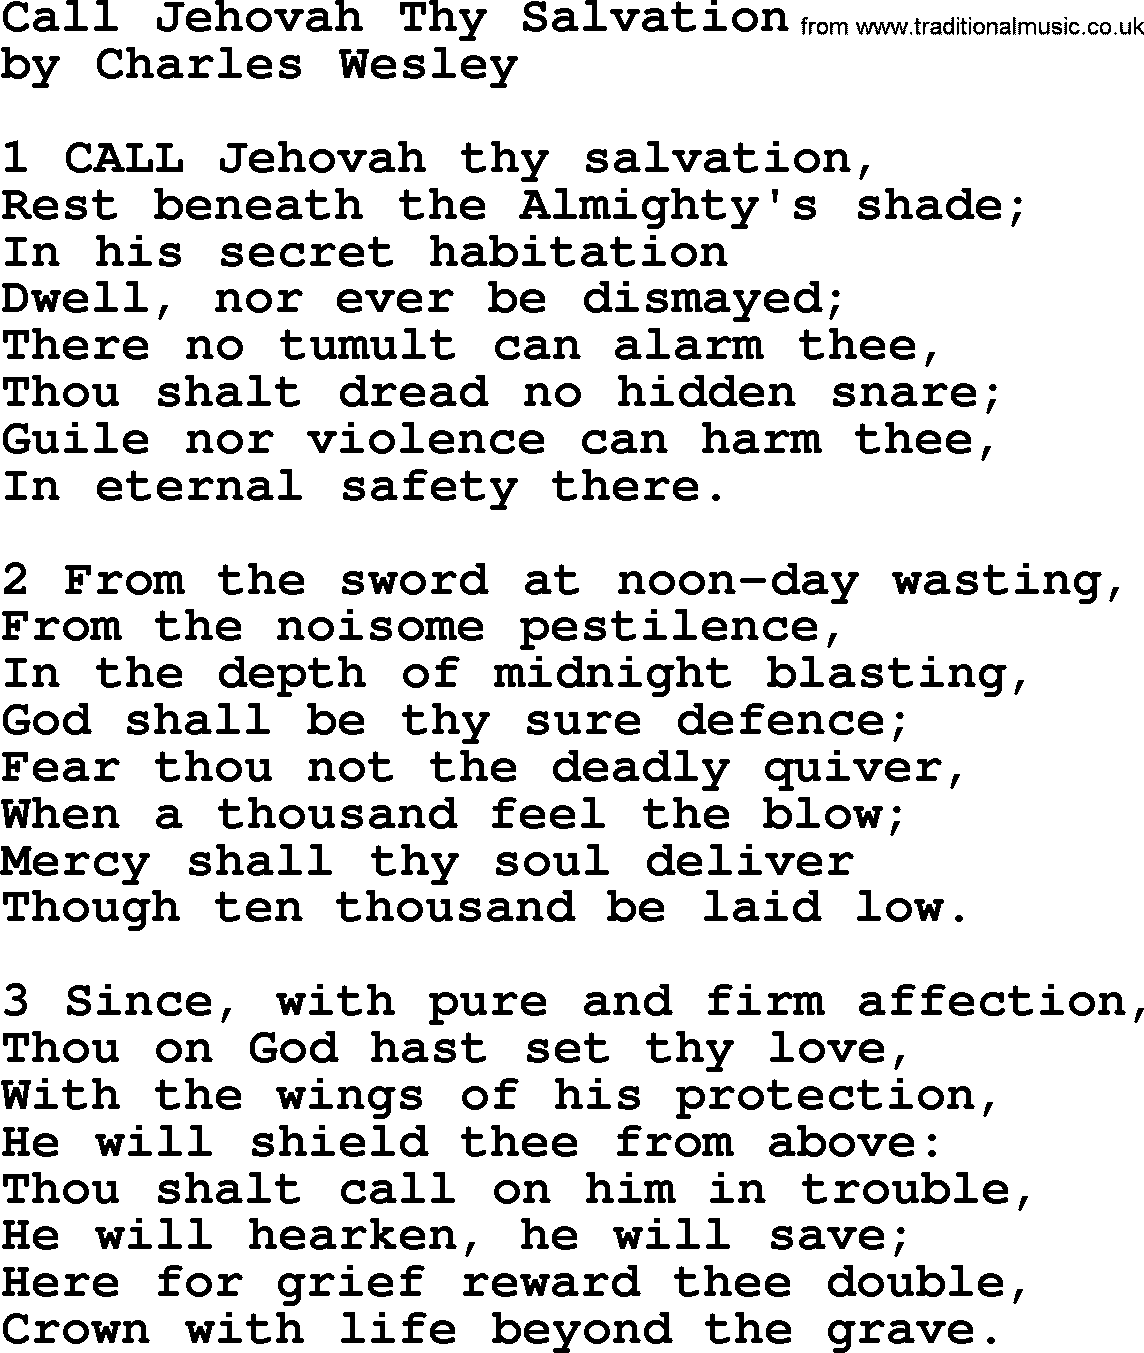 Charles Wesley hymn: Call Jehovah Thy Salvation, lyrics